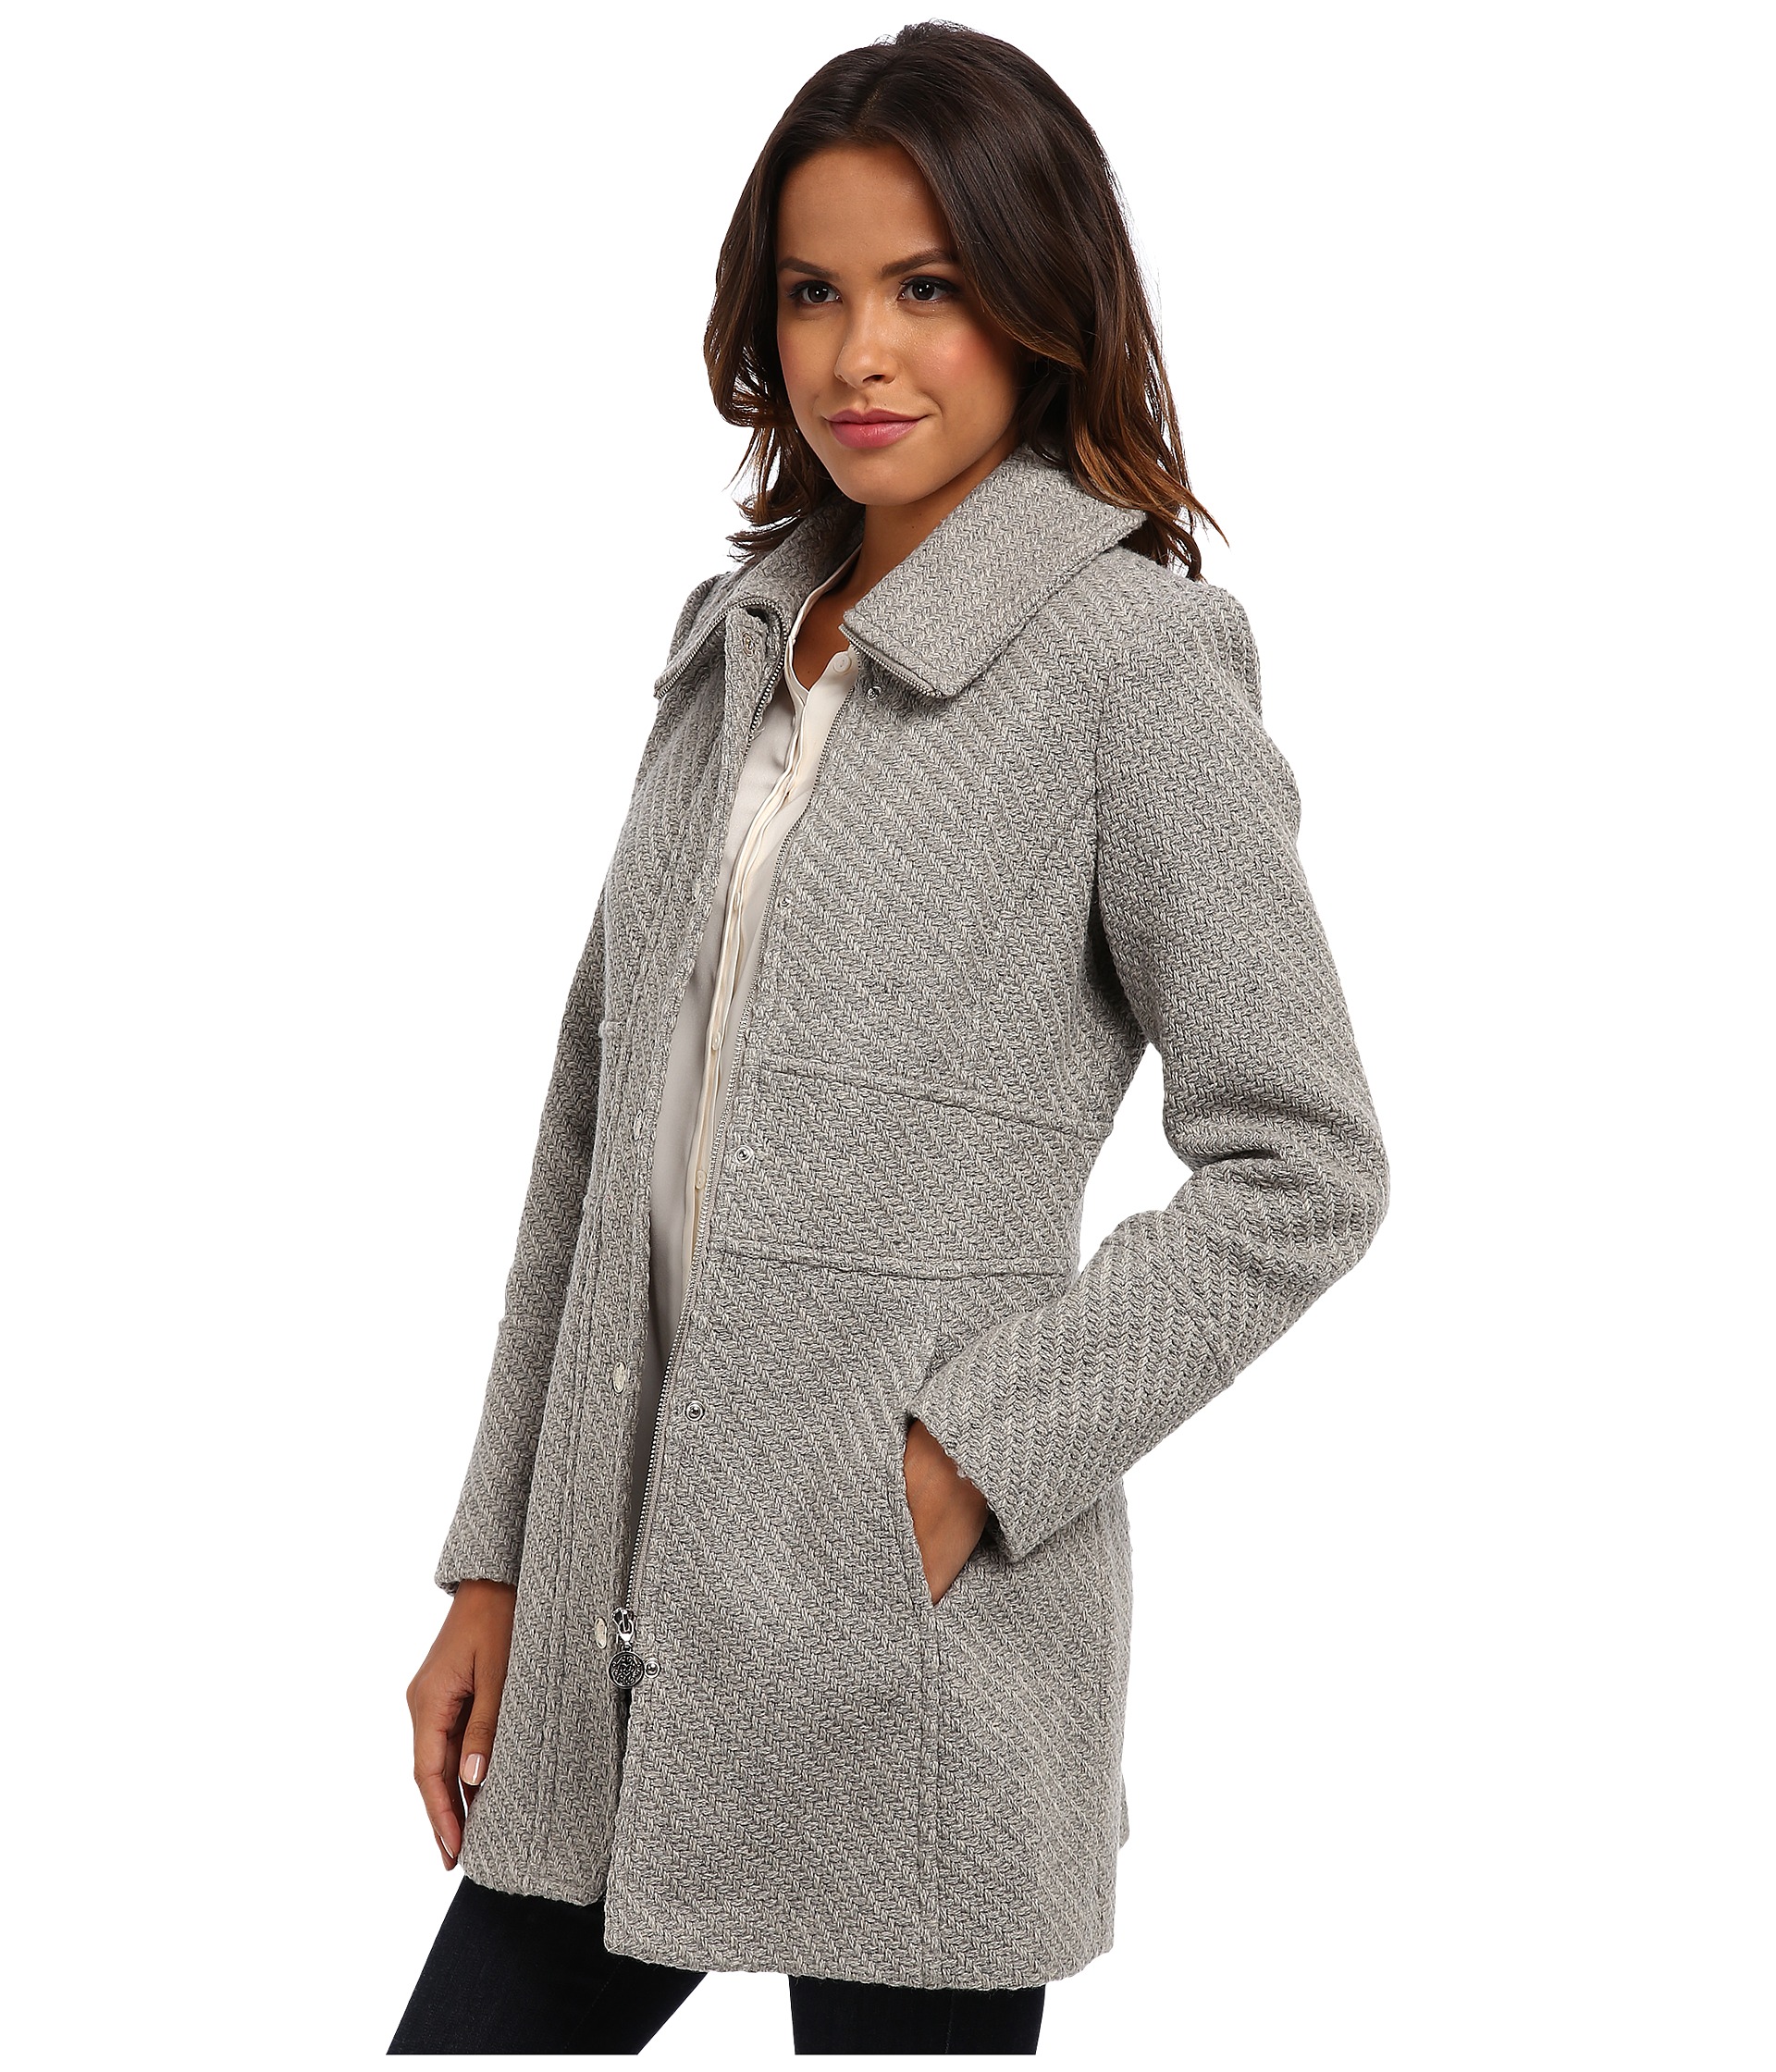 Jessica Simpson Jofmh502 Coat, Clothing, Women | Shipped Free at Zappos